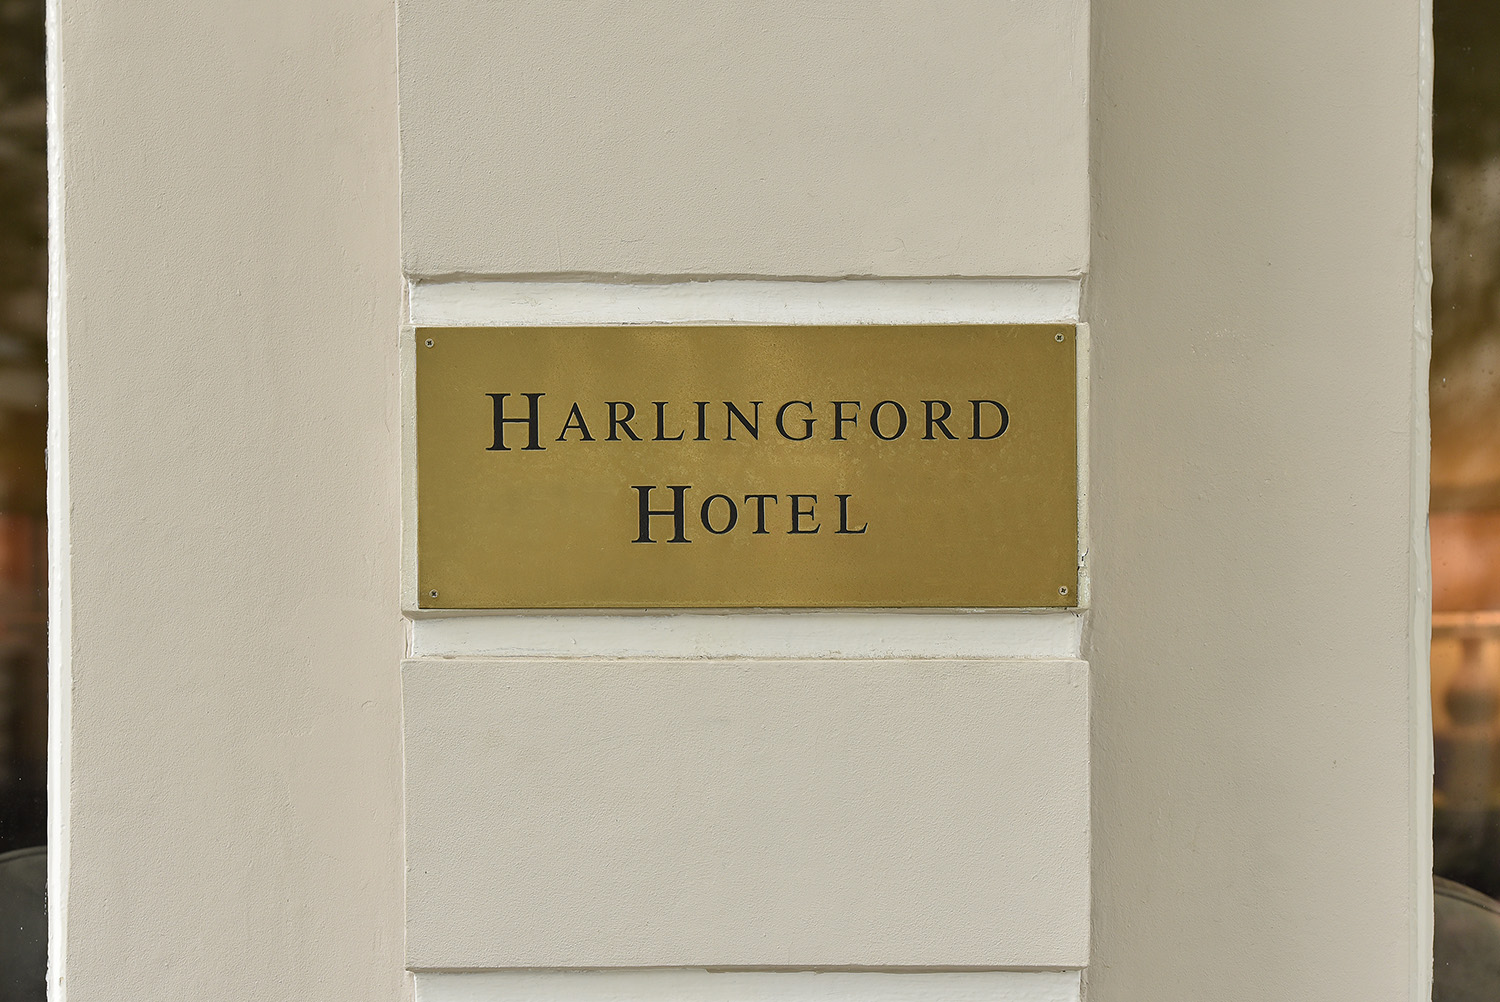 The Harlingford Hotel